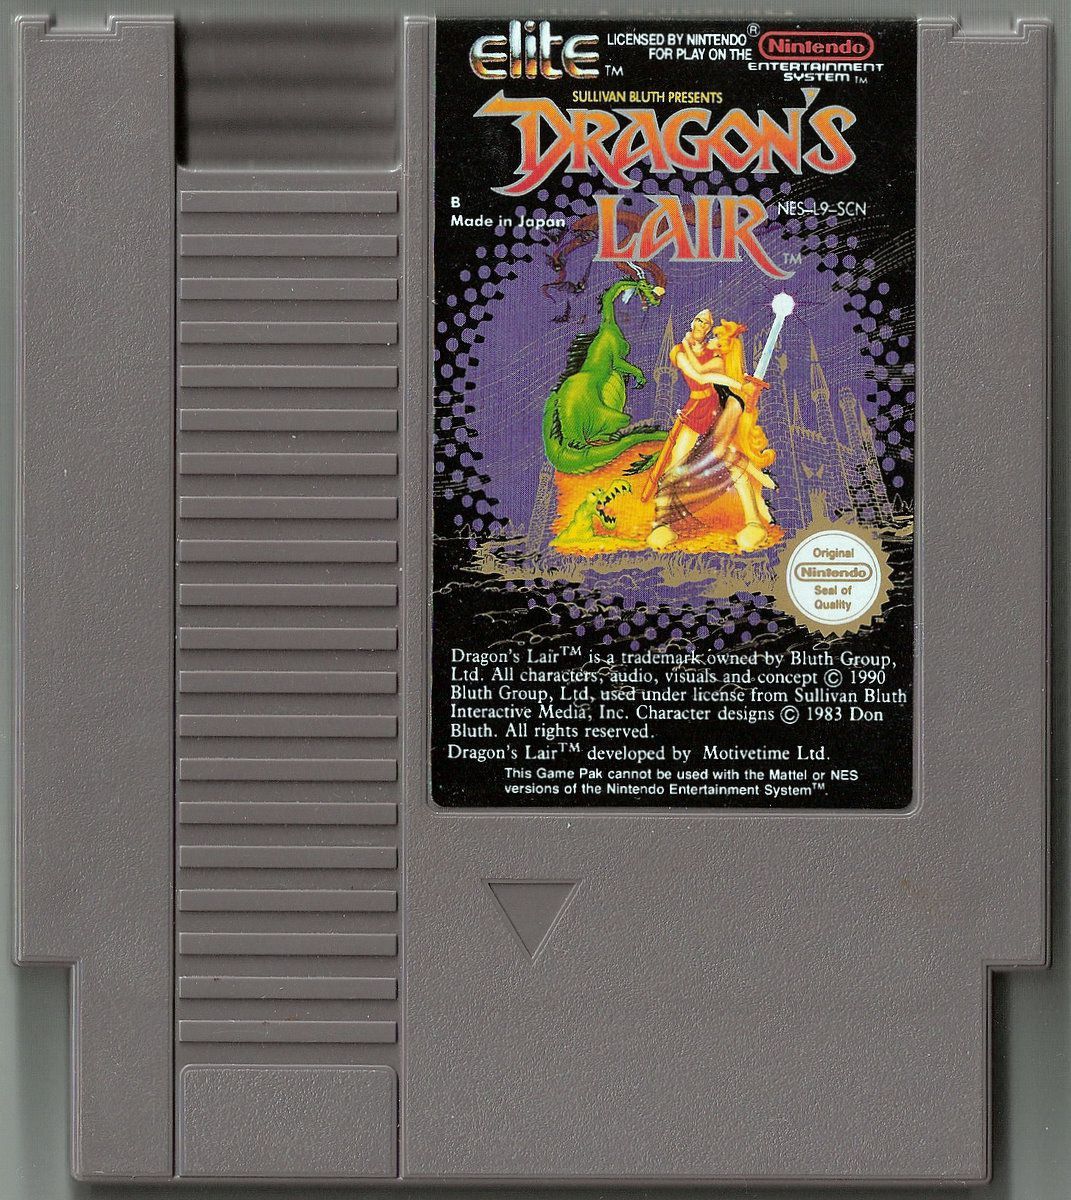 Stræde forhold alias Dragon's Lair (NES) | Image | BoardGameGeek